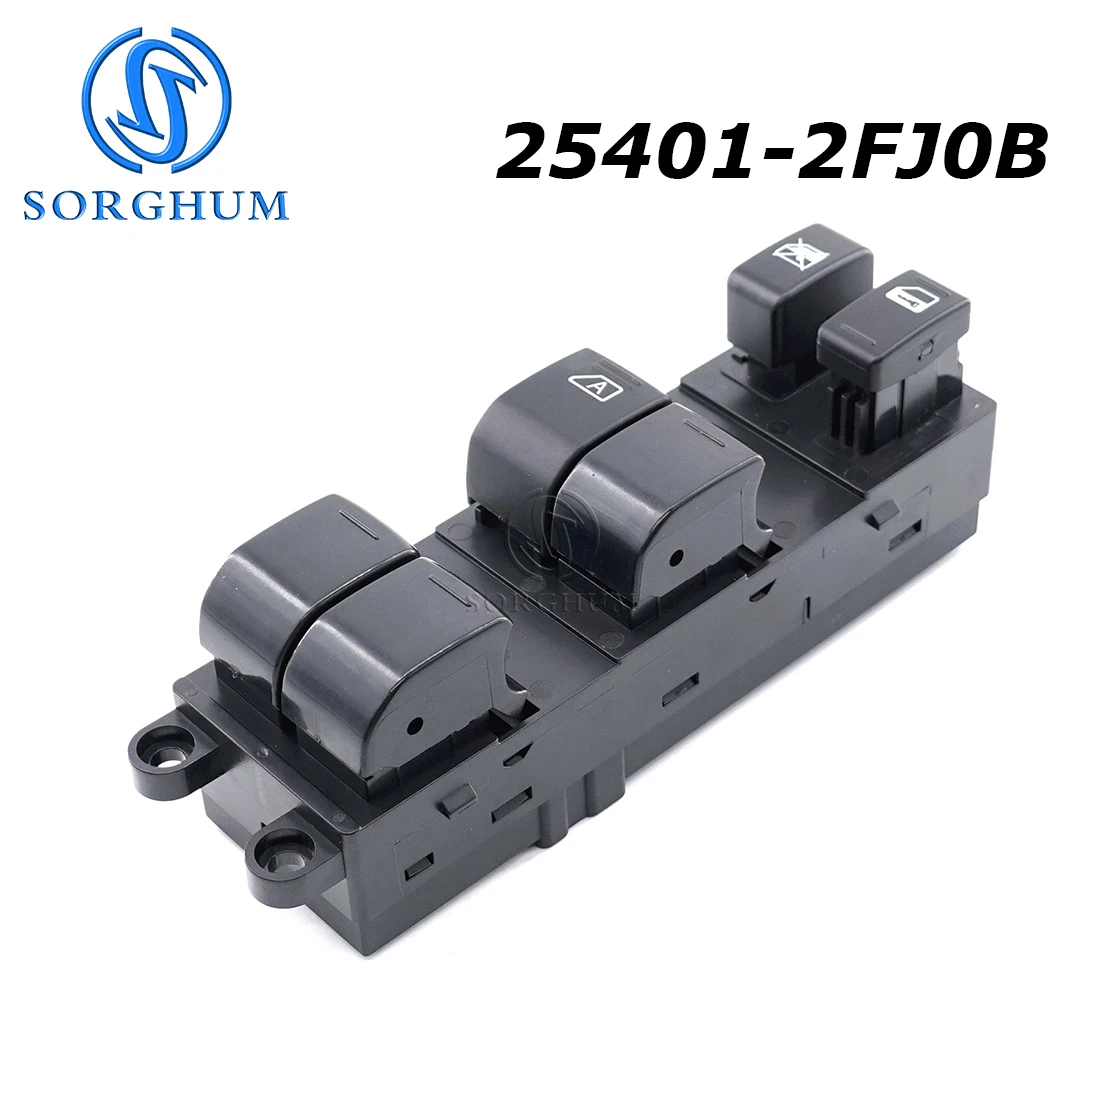 

Sorghum 25401-2FJ0B 254012FJ0B Left Driver Power Window Switch Regulator For Nissan venucia D50 R50 R50X M50V Car Accessories